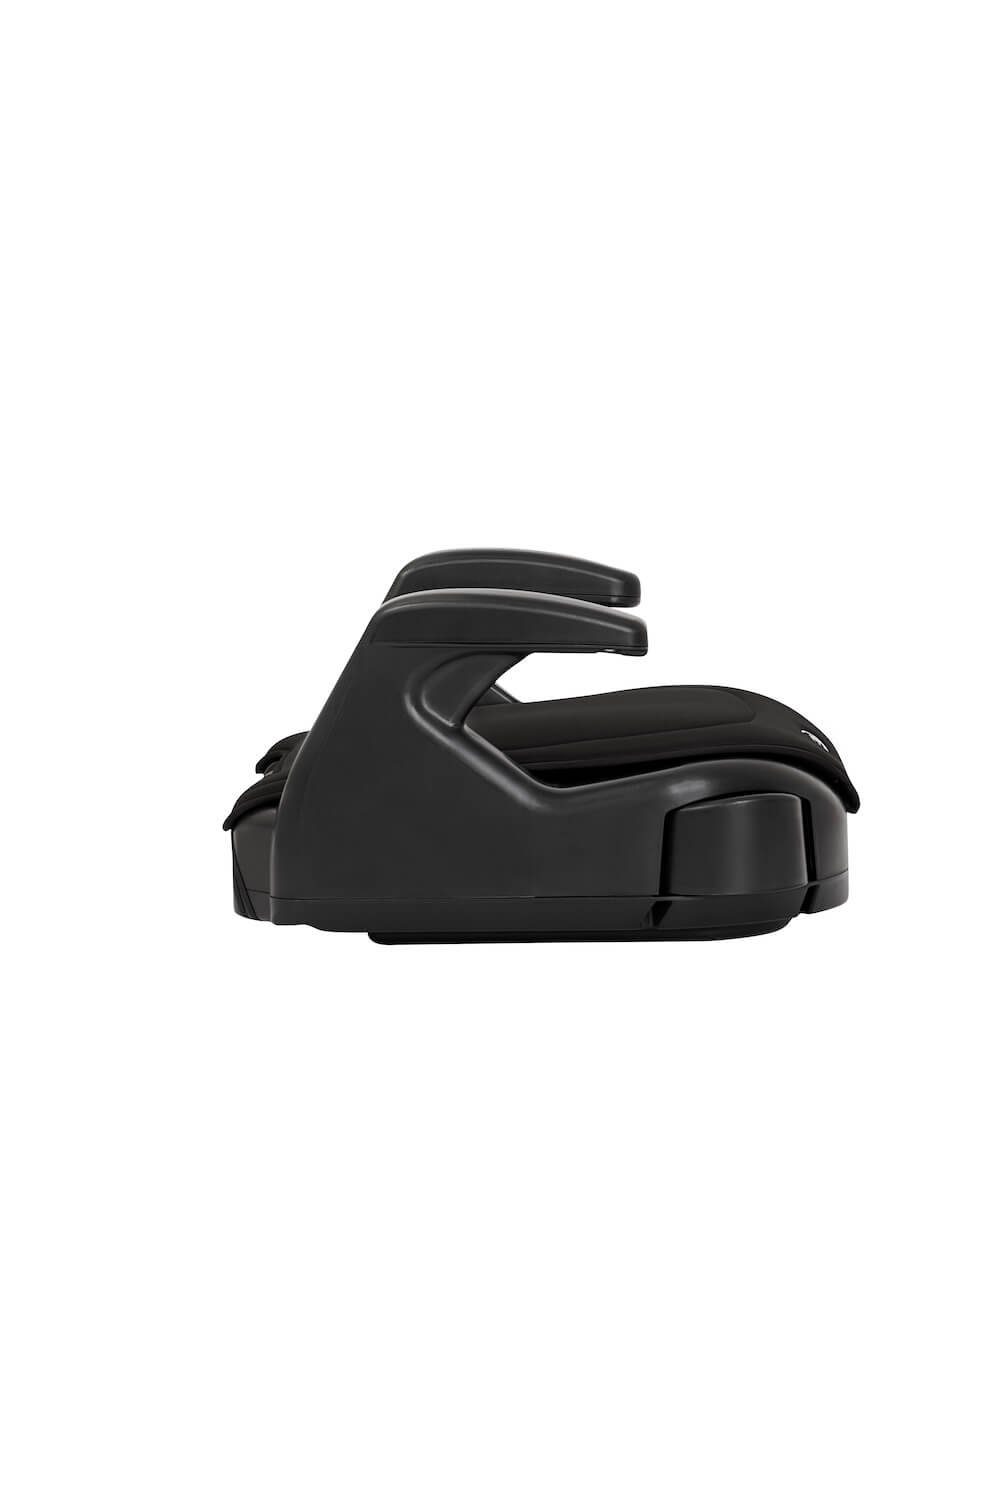 Booster Graco - Autokindersitz - Graco R129 Basic Kindersitzerhöhung Farbe: Black